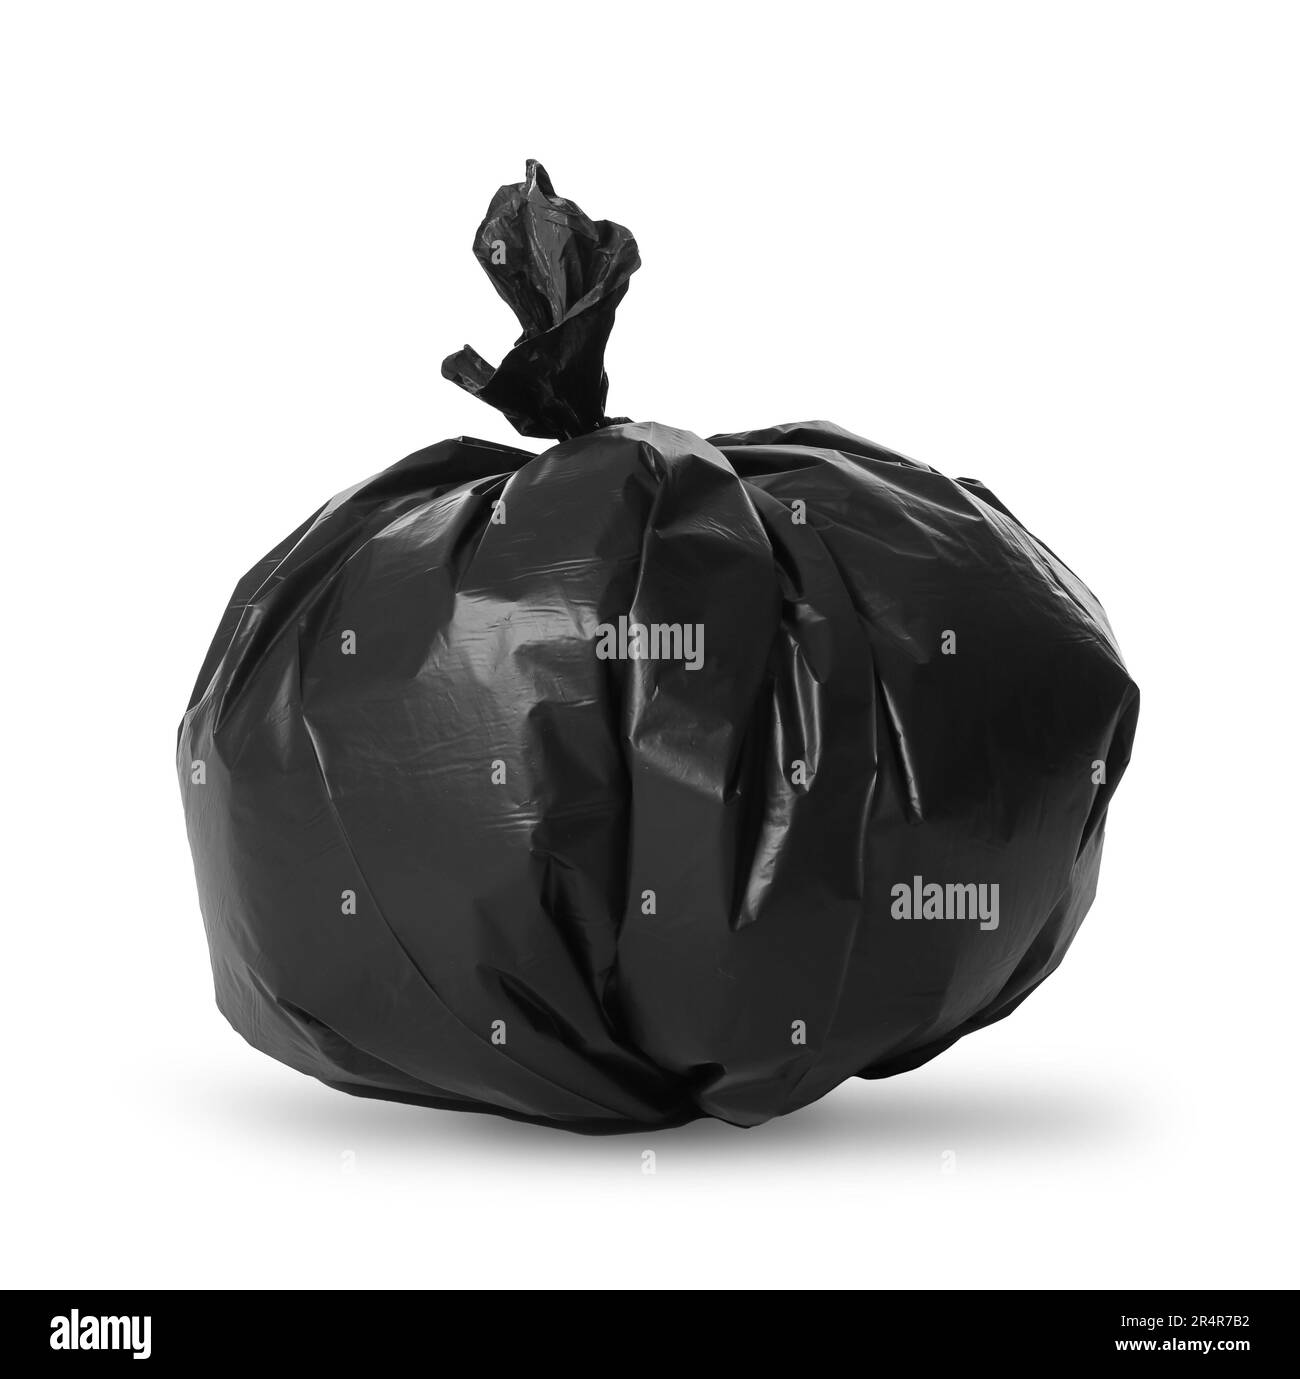 https://c8.alamy.com/comp/2R4R7B2/trash-bag-full-of-garbage-isolated-on-white-2R4R7B2.jpg